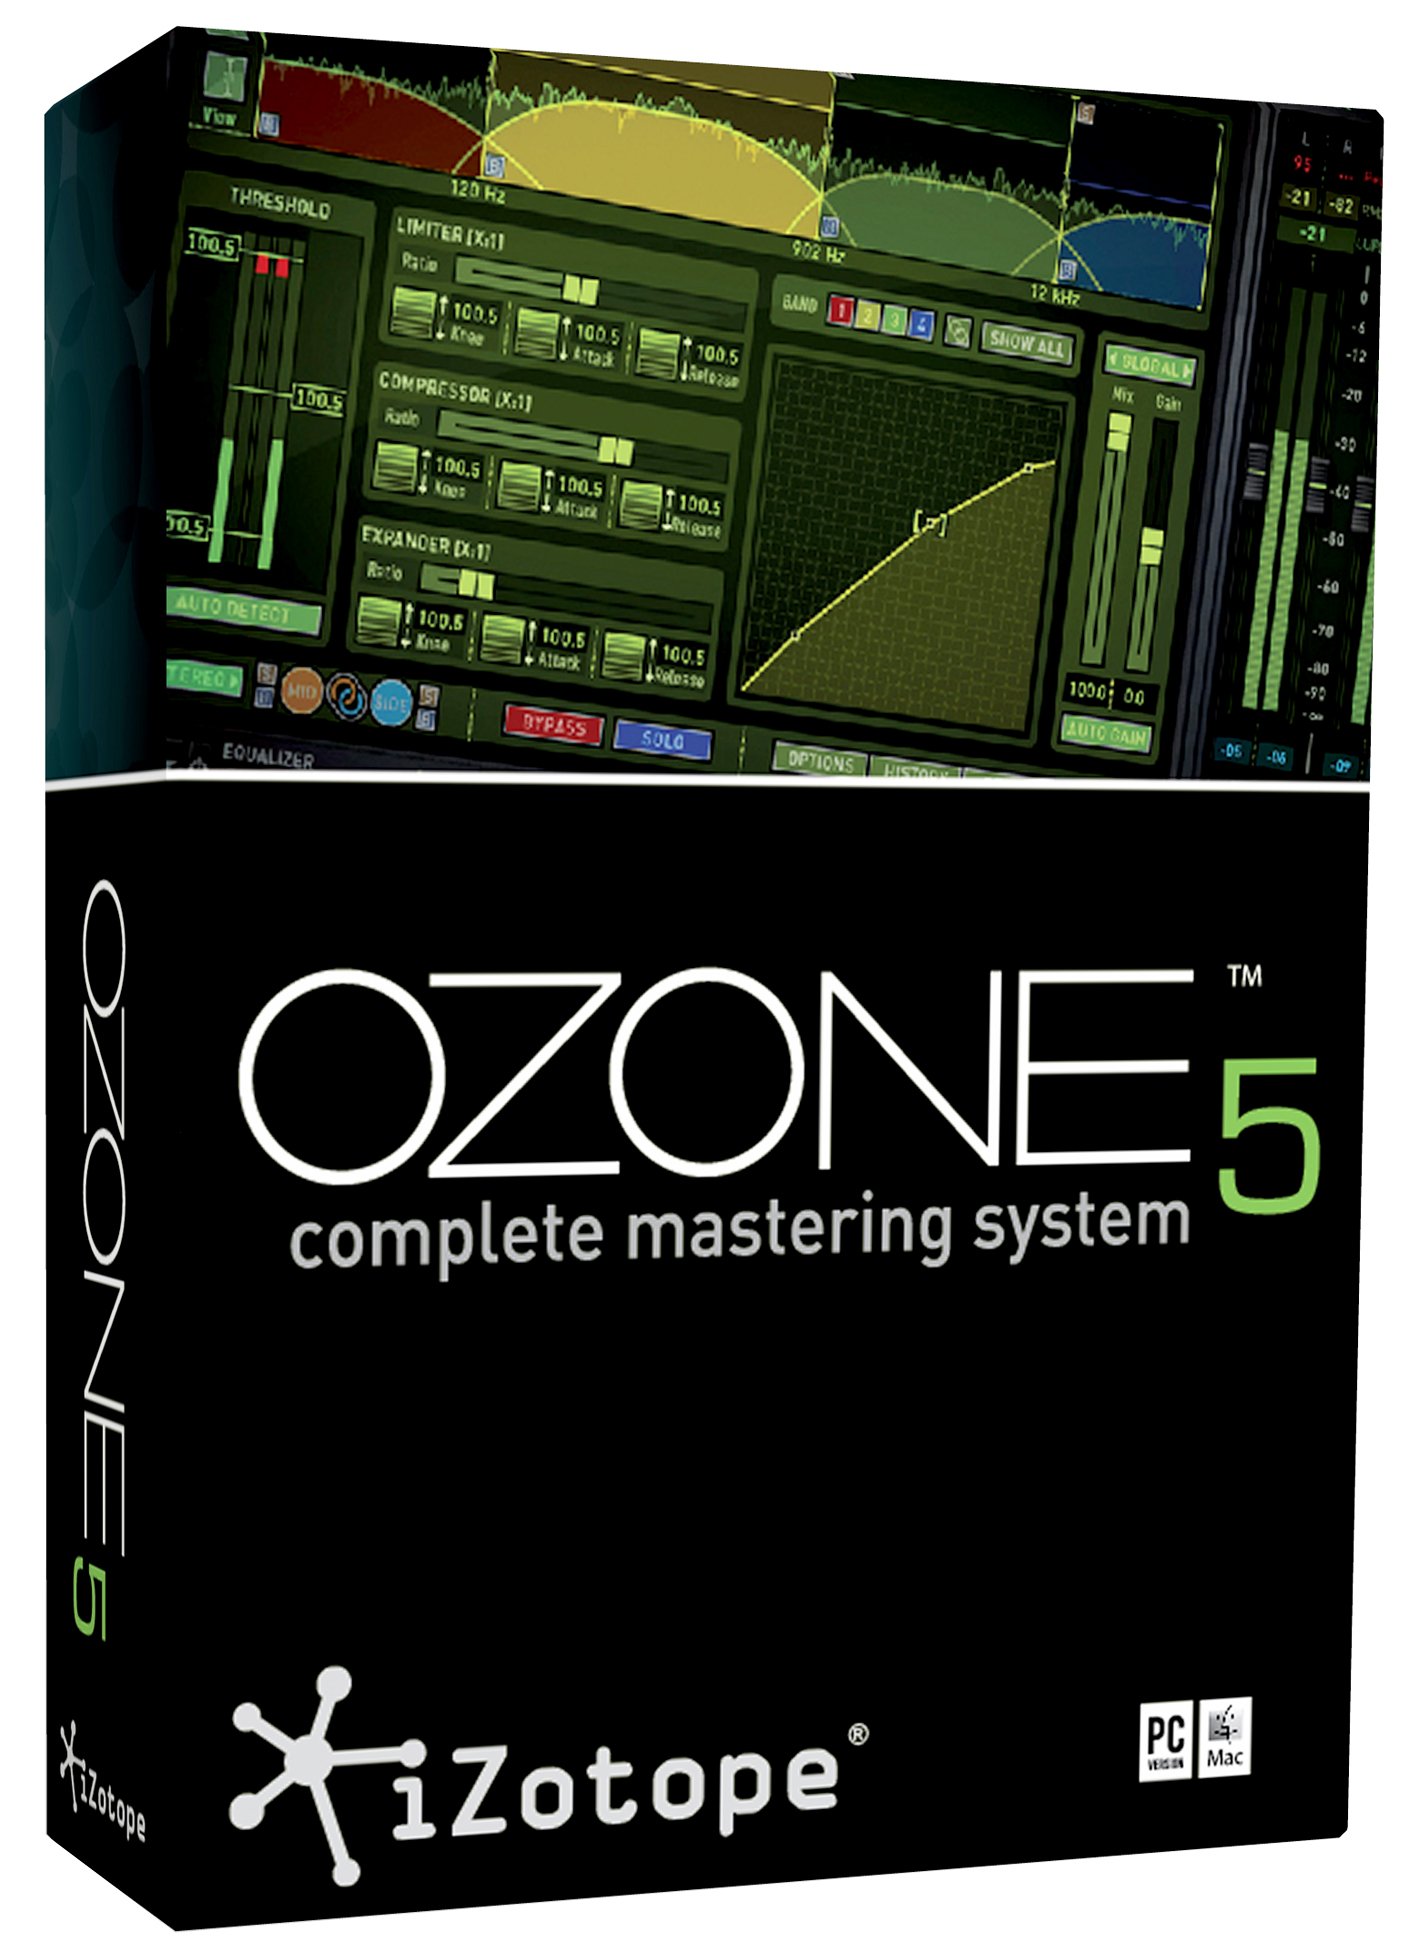 Izotope ozone 5 authorization file free download full version